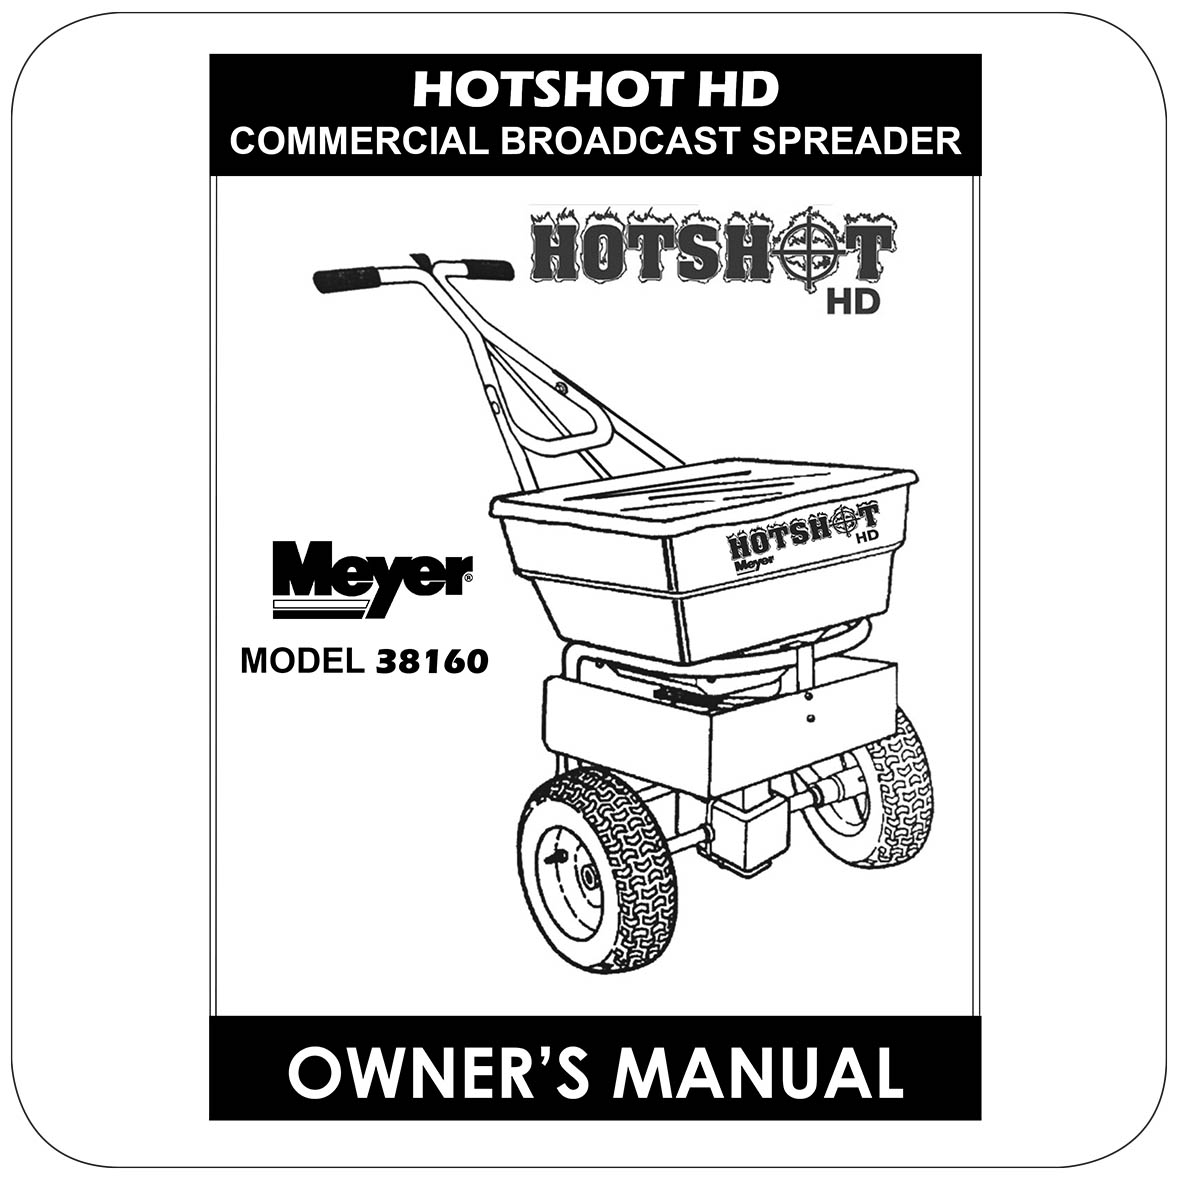 Owners Manual HotShot 100HD - 38160